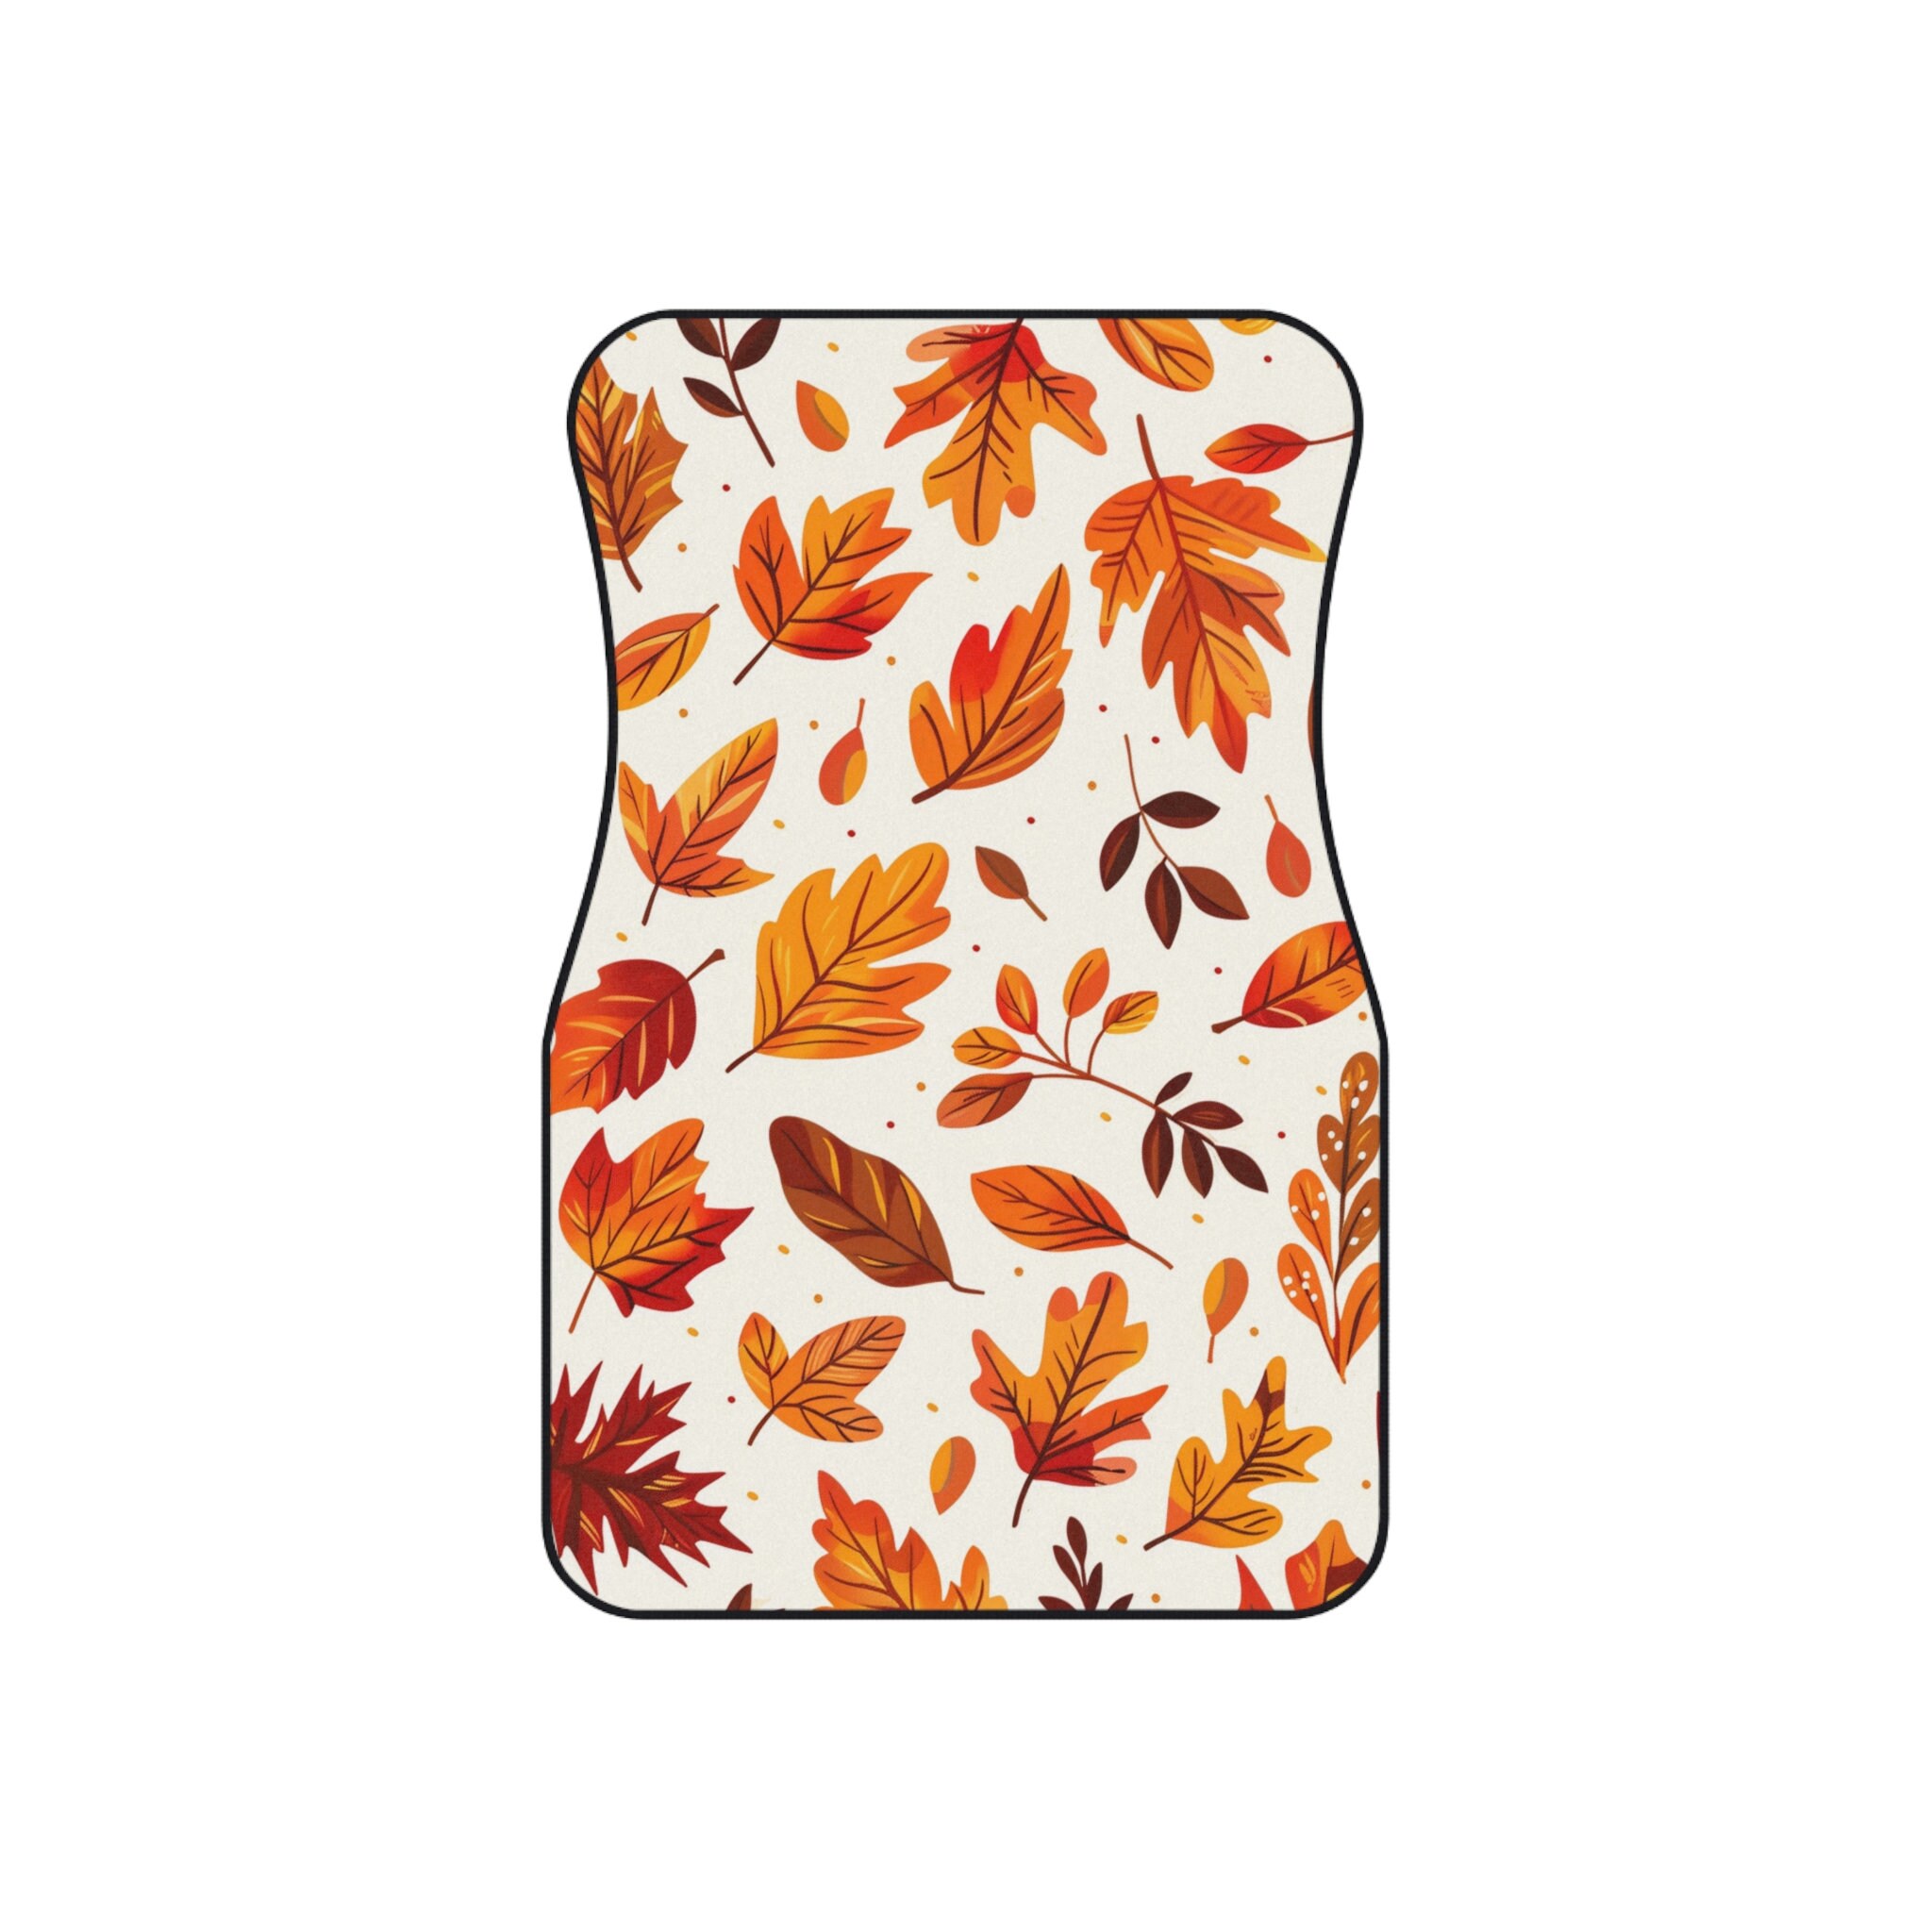 Discover Fall Car Mats set custom car mats for women fall leaves autumn time car accessories